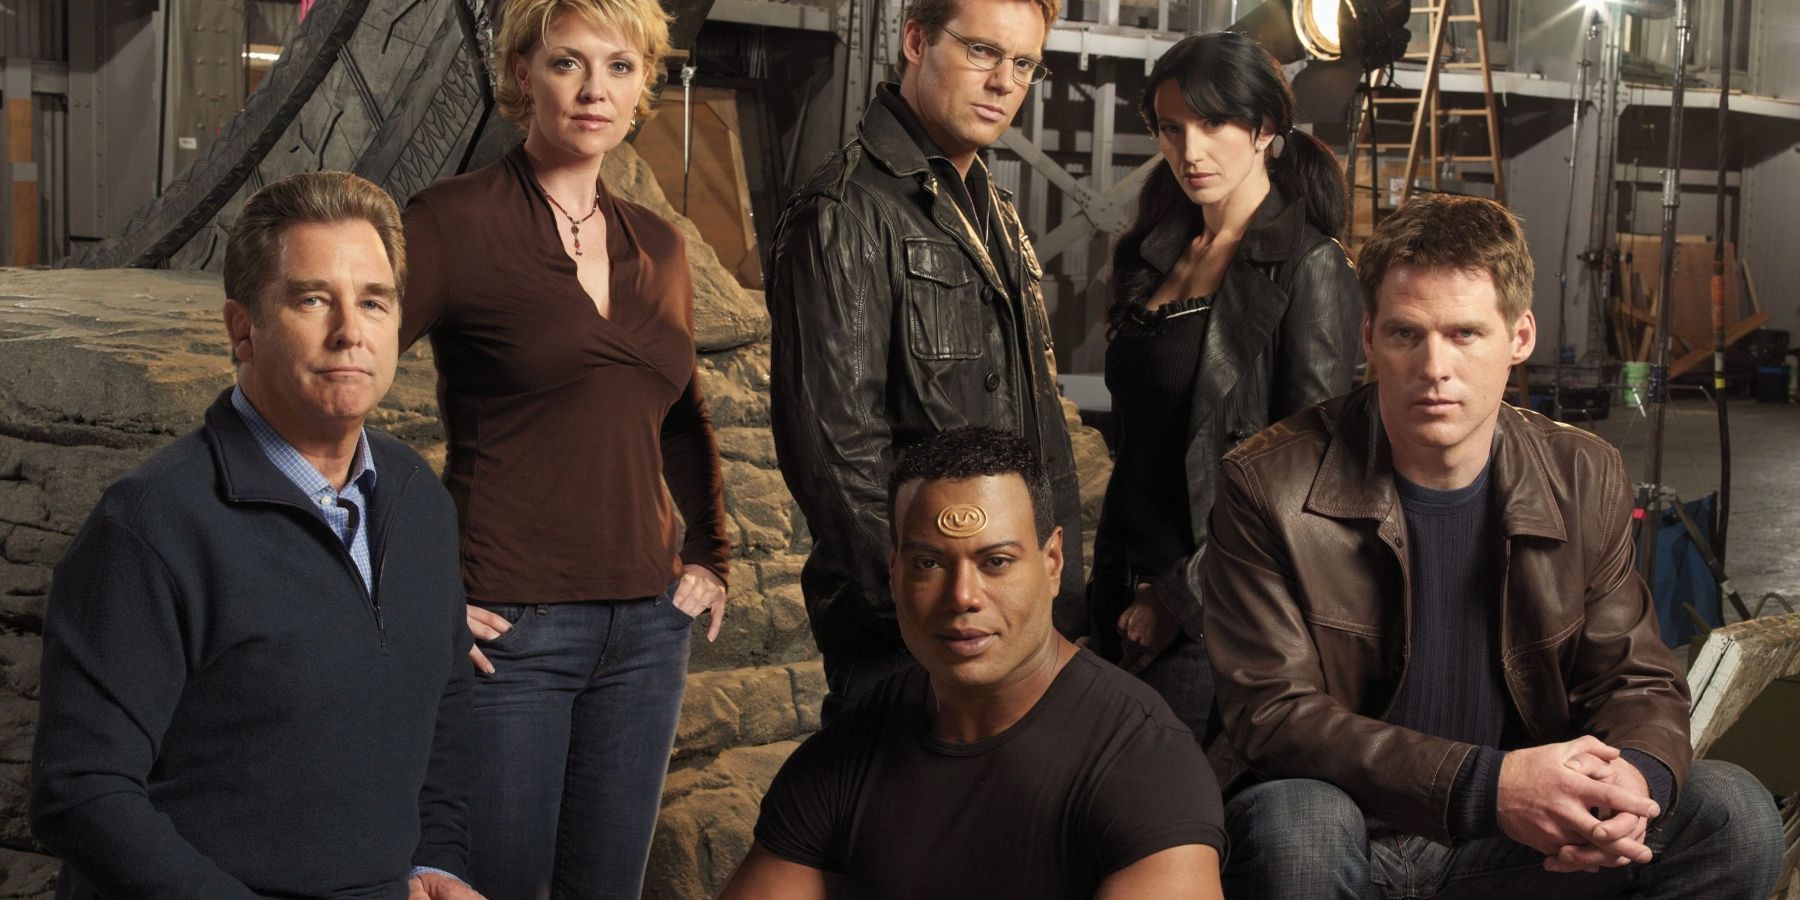 Stargate SG-1 crew